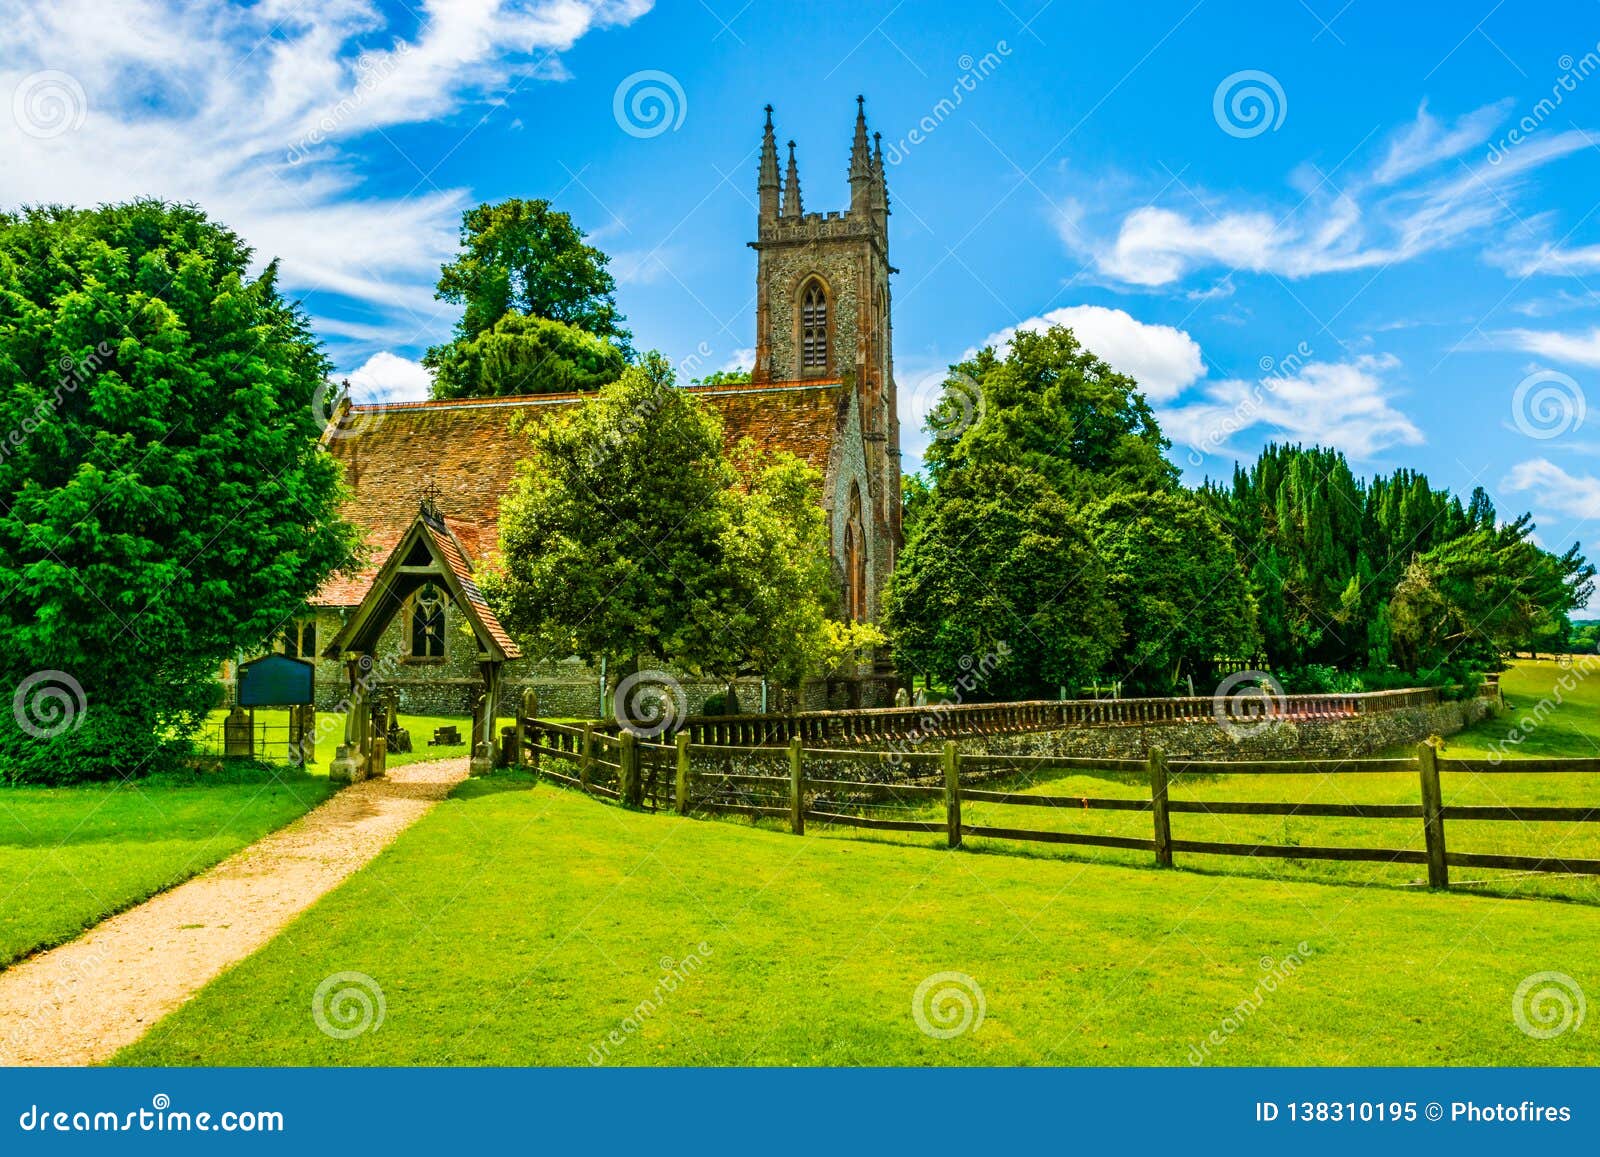 St Nicholas Church in Chawton, Hampshire, England Stock Image - Image